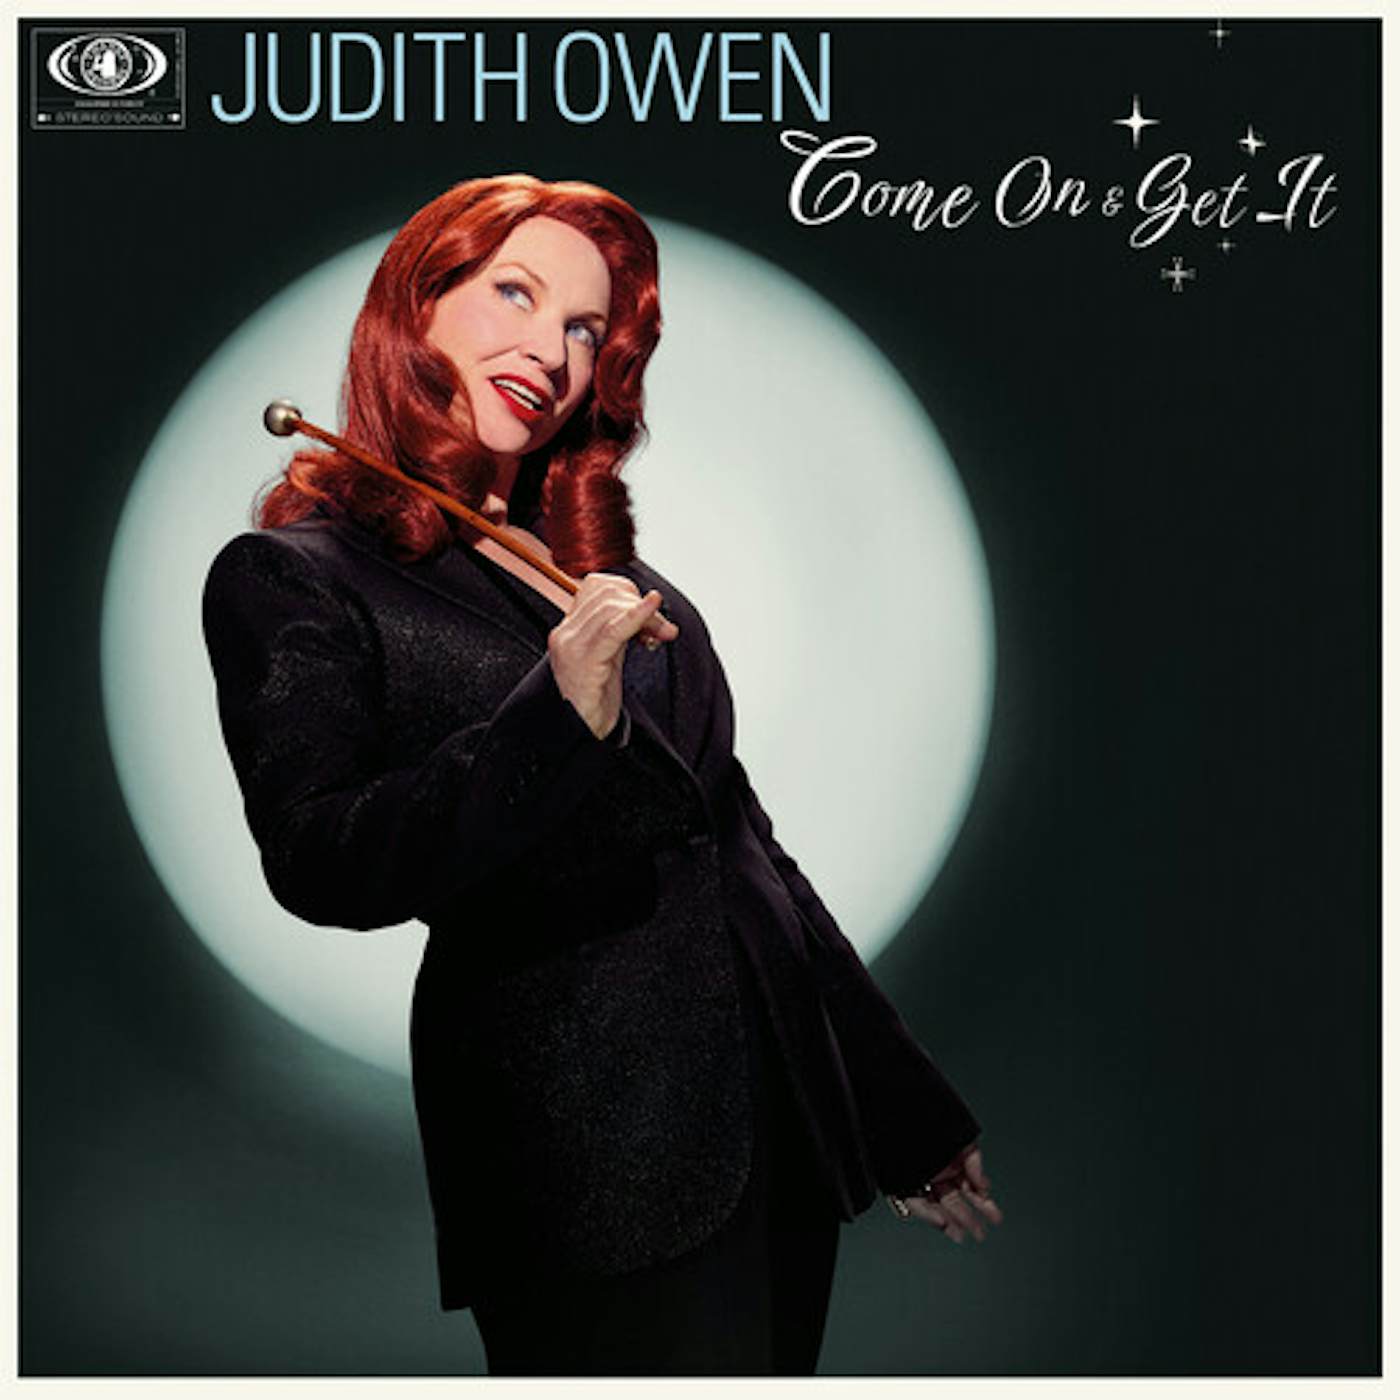 Judity Owen COME ON & GET IT Vinyl Record